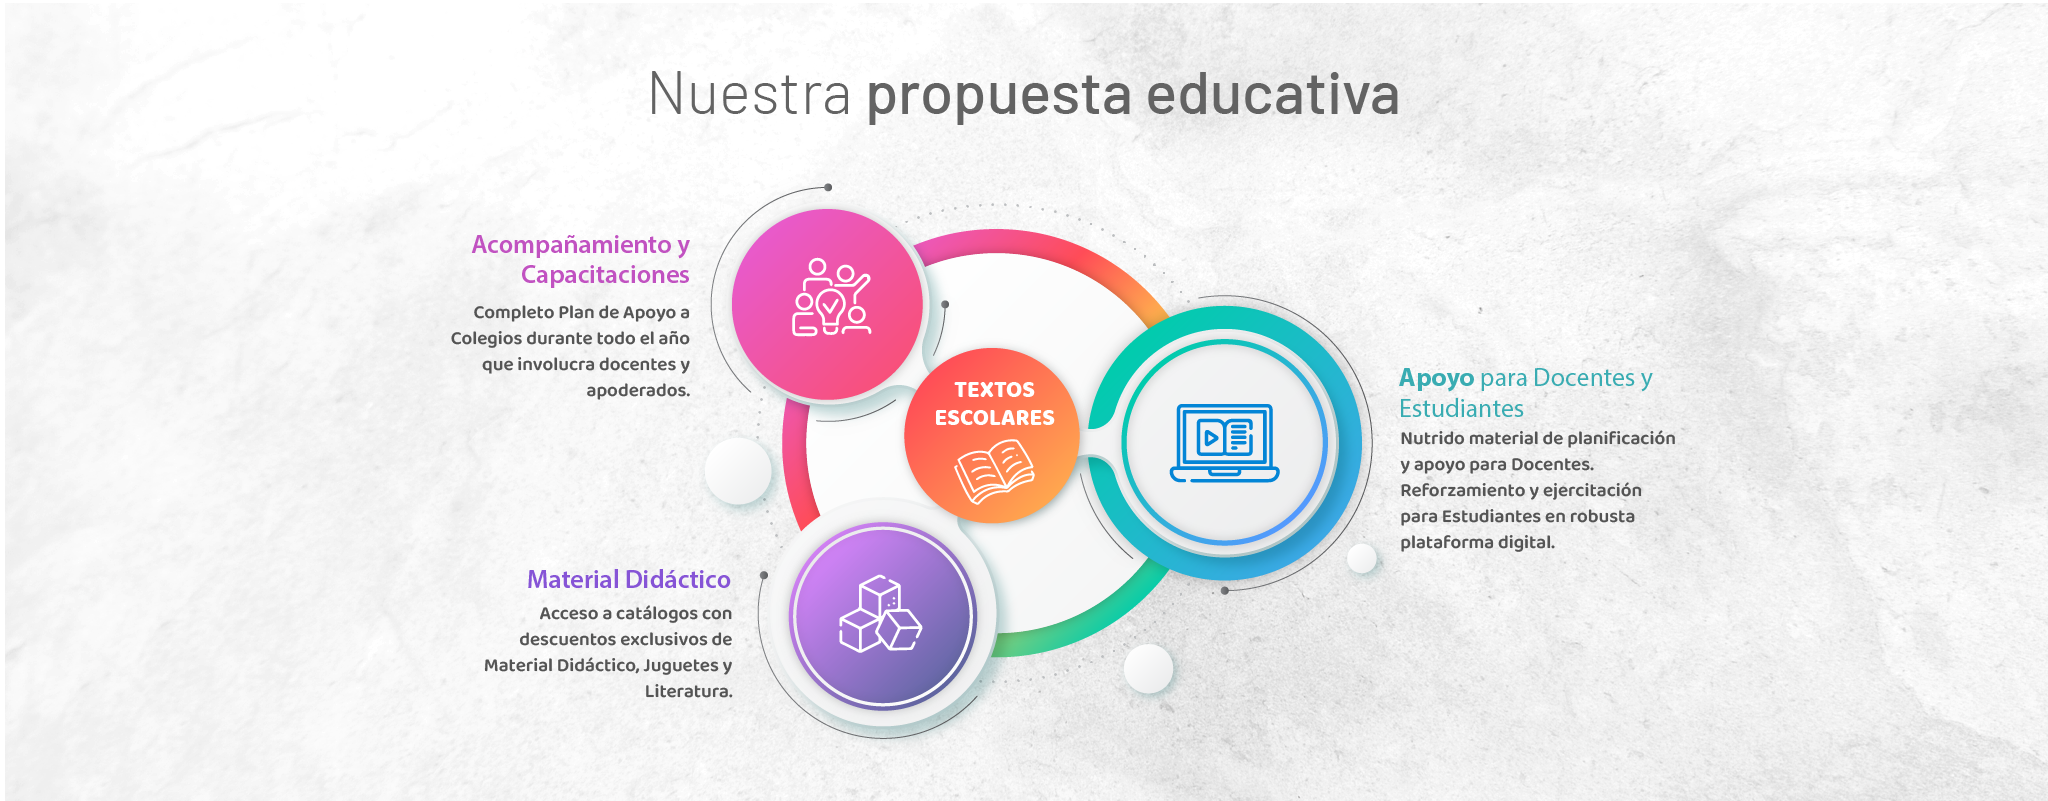 propuesta_educativa2